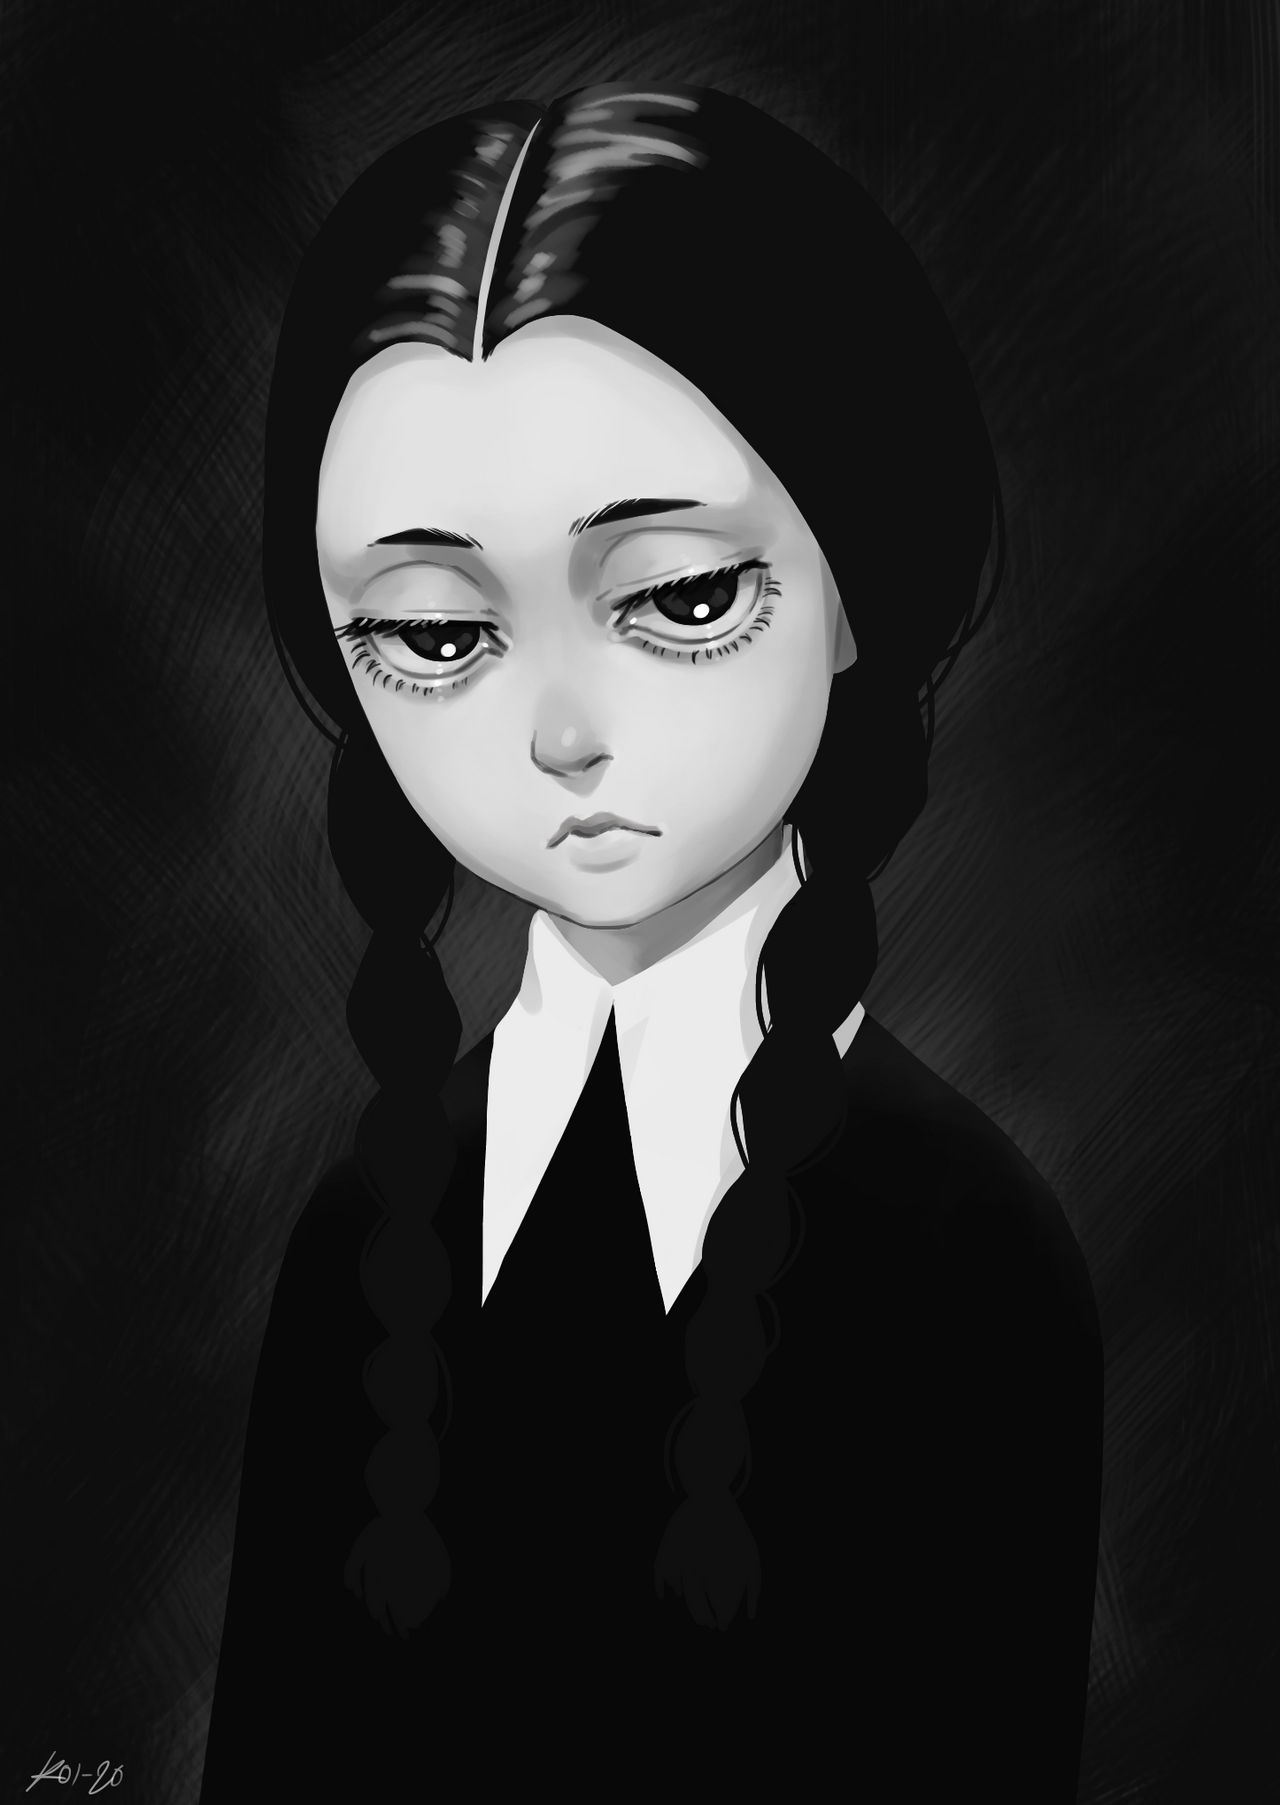 Wednesday Addams by KoiHorkka on DeviantArt